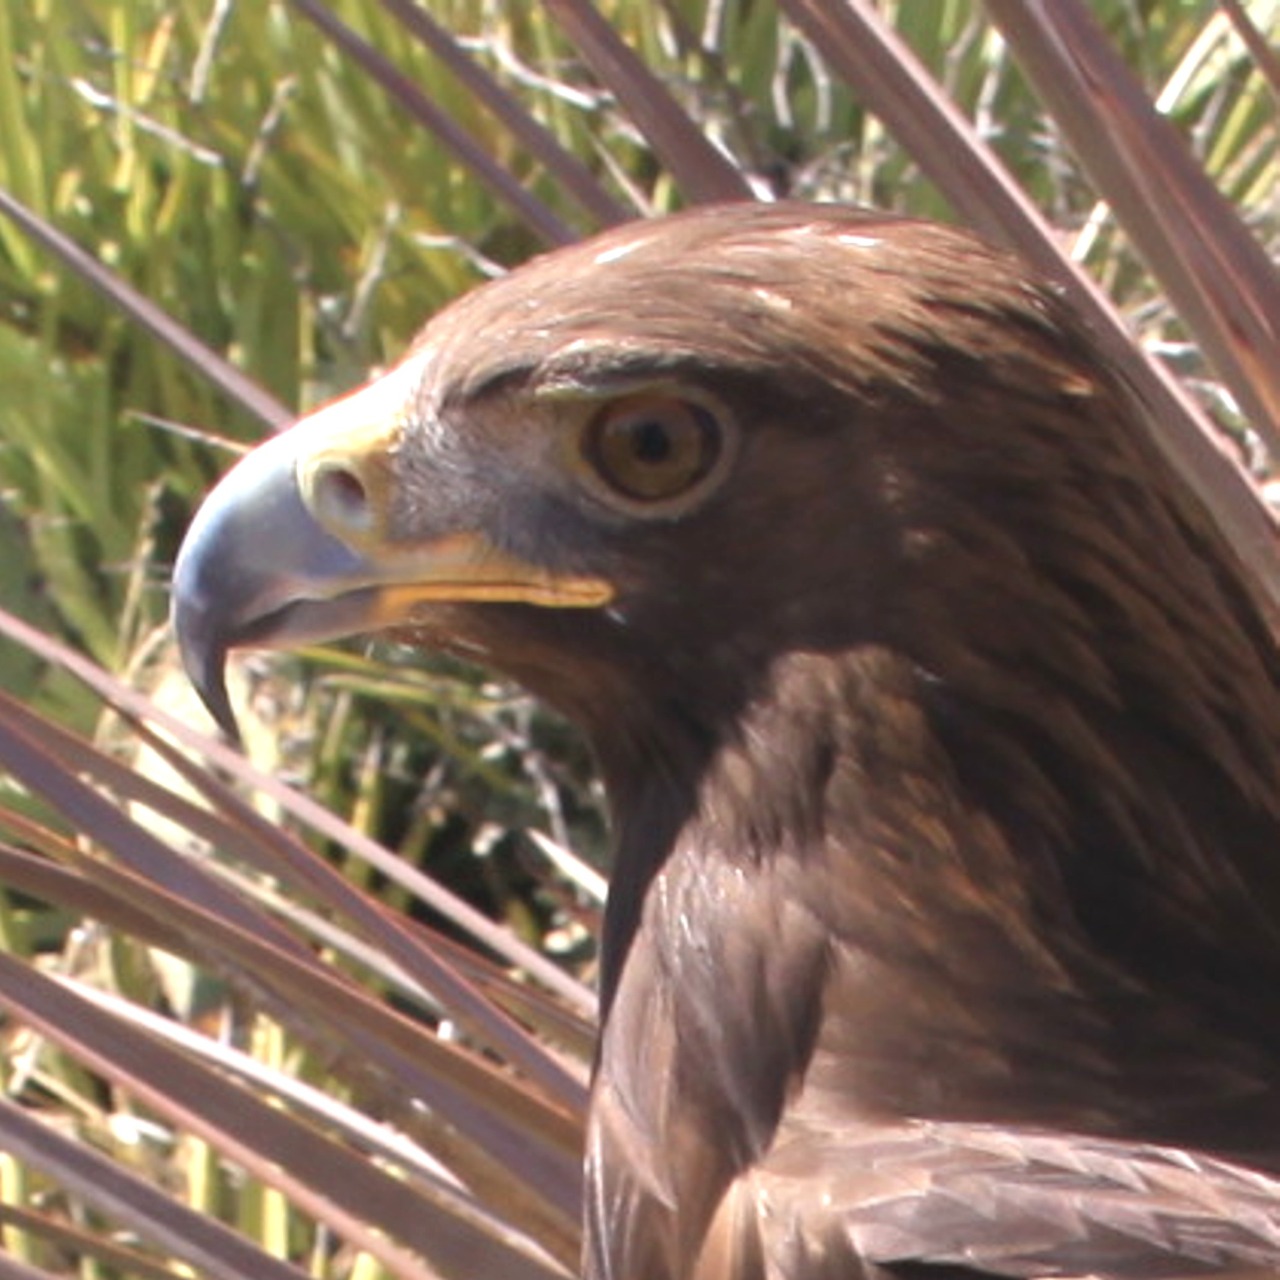 La vista del águila real es ocho veces más poderosa que la del ser humano. (Fuente: www.gob.mx)